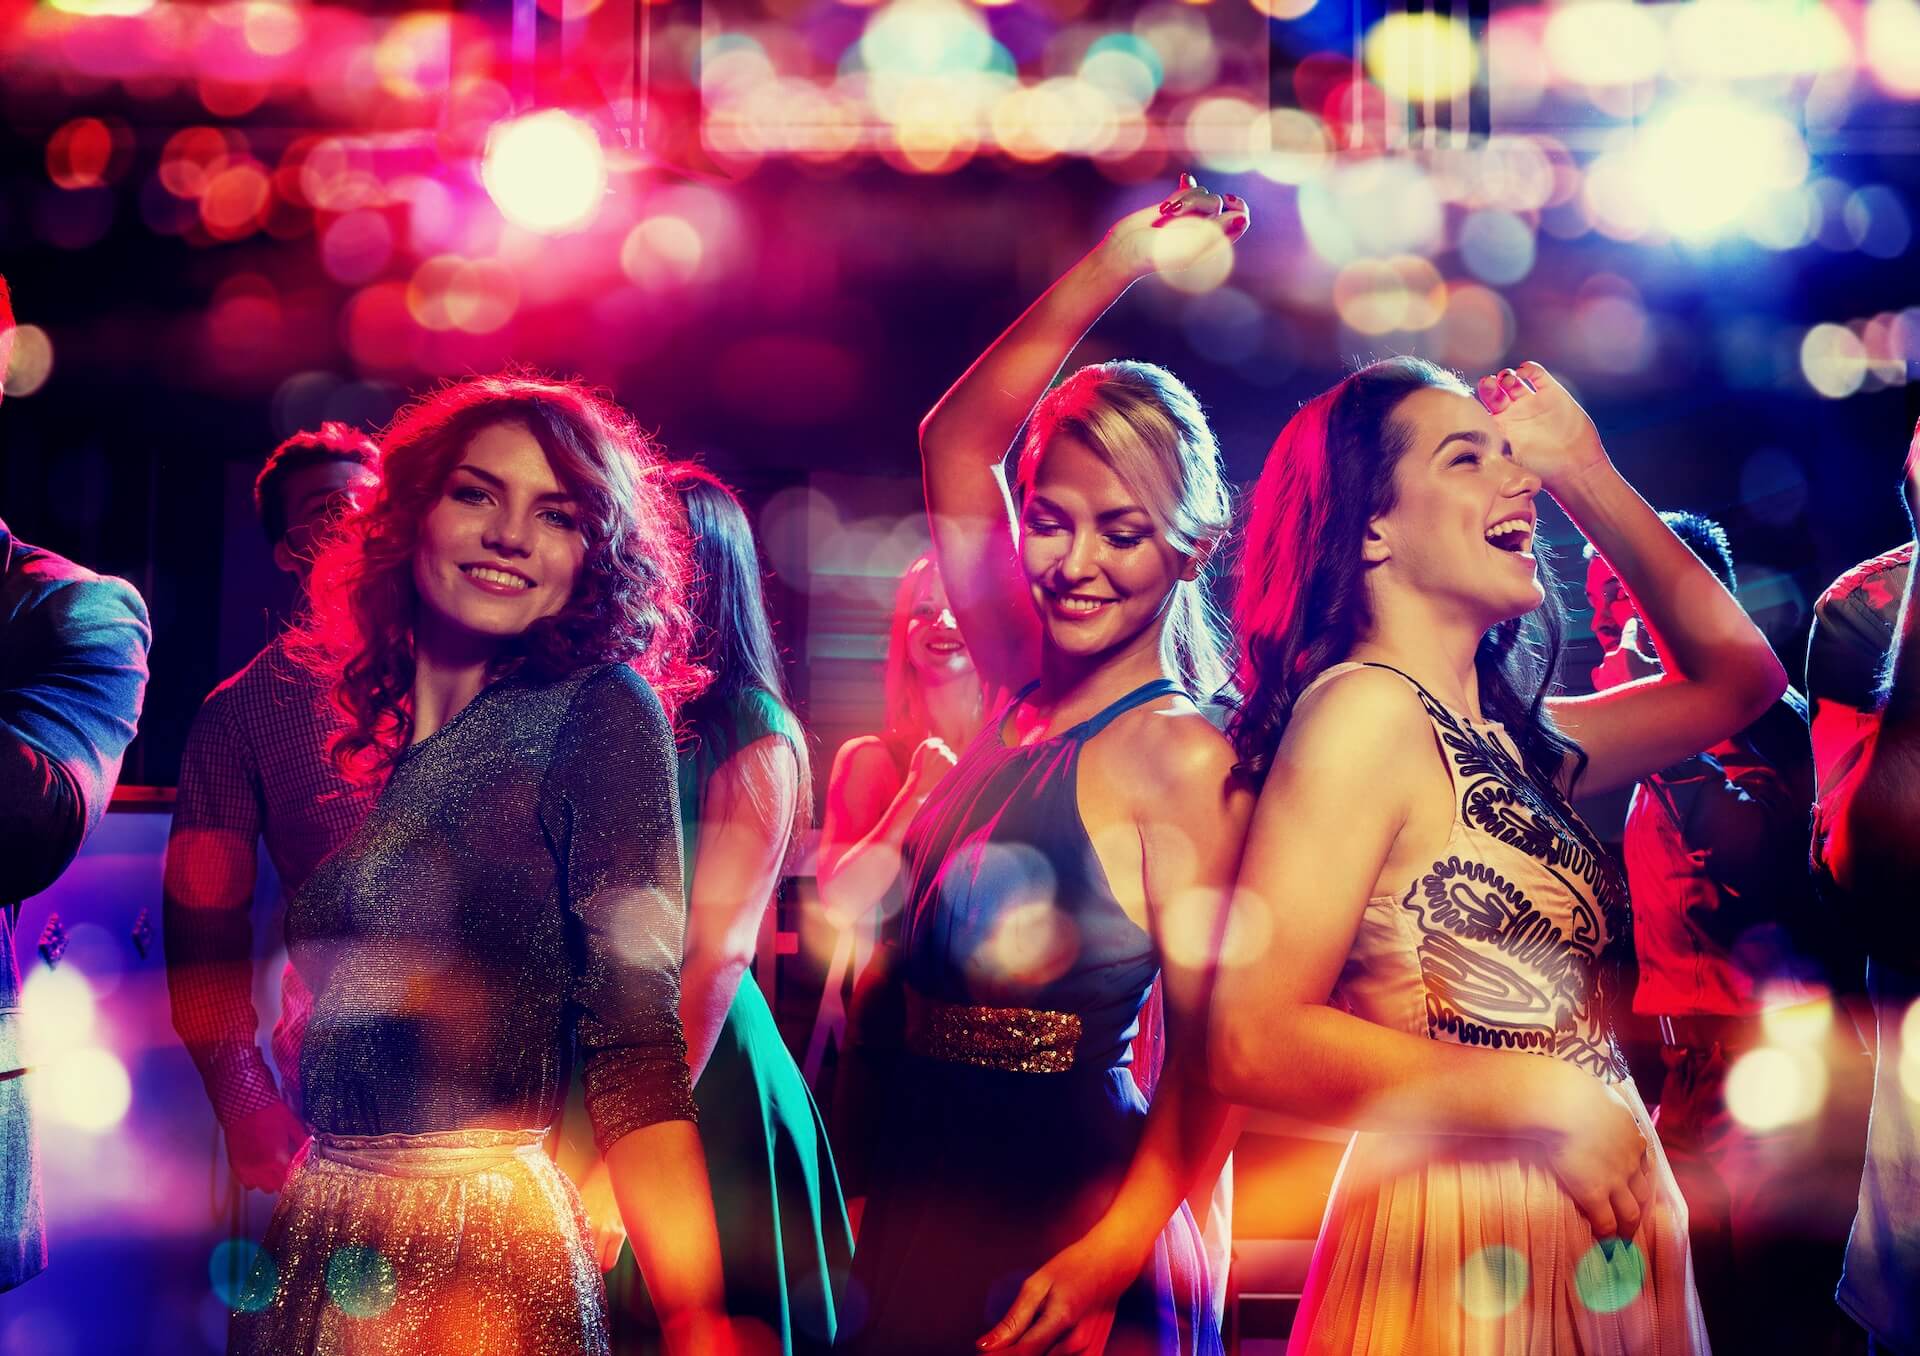 Girls dancing in a club